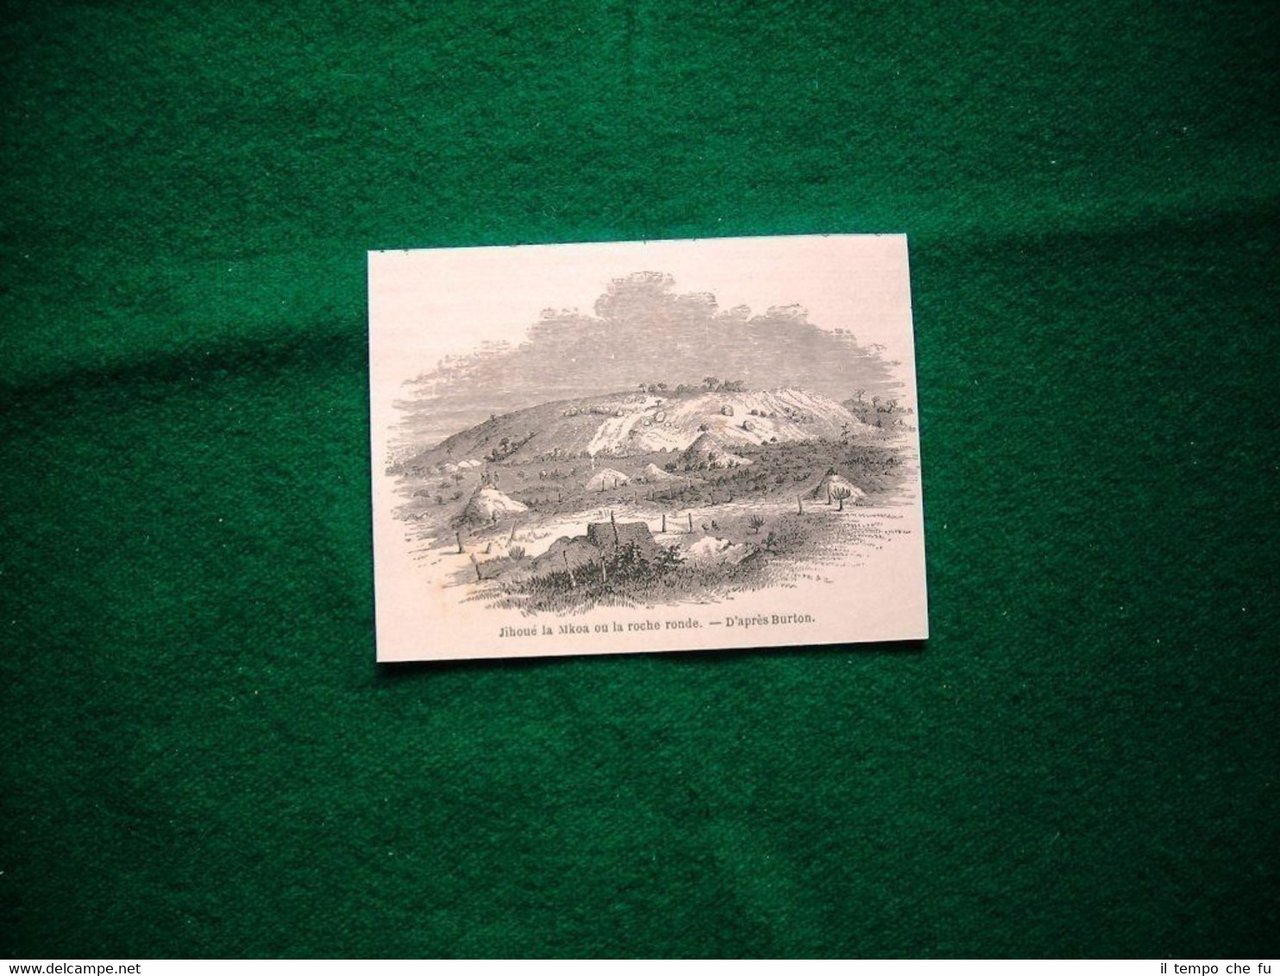 Gravure année 1860 Jihoué la Mkoa ou la roche ronde